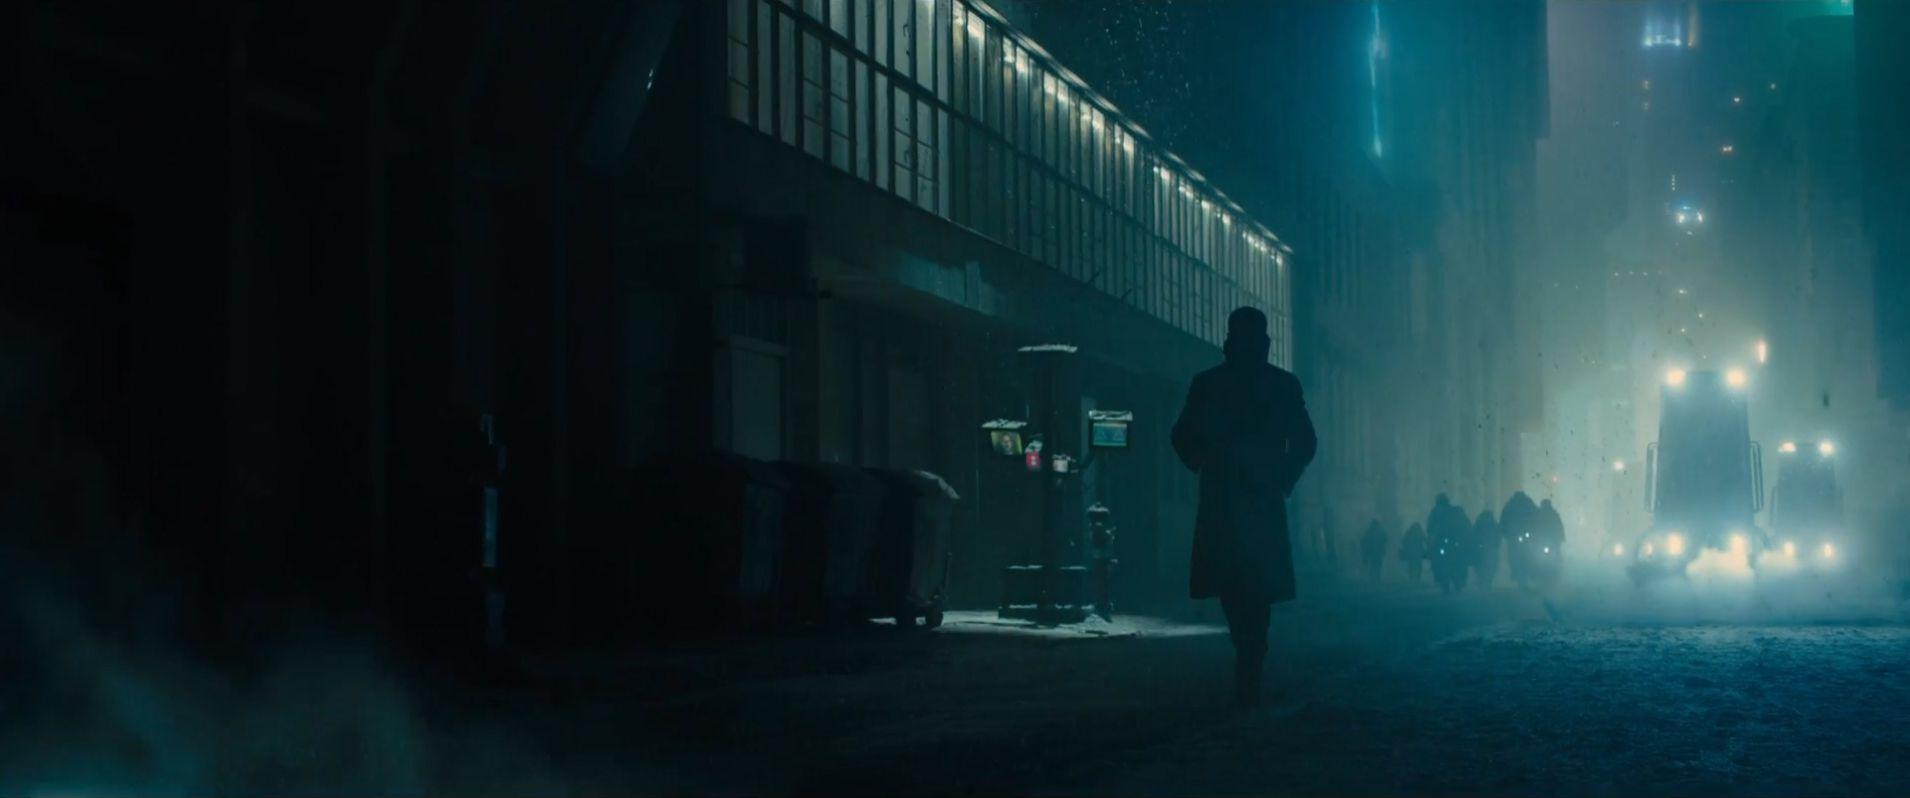 Blade Runner 2049 Wallpapers - Wallpaper Cave